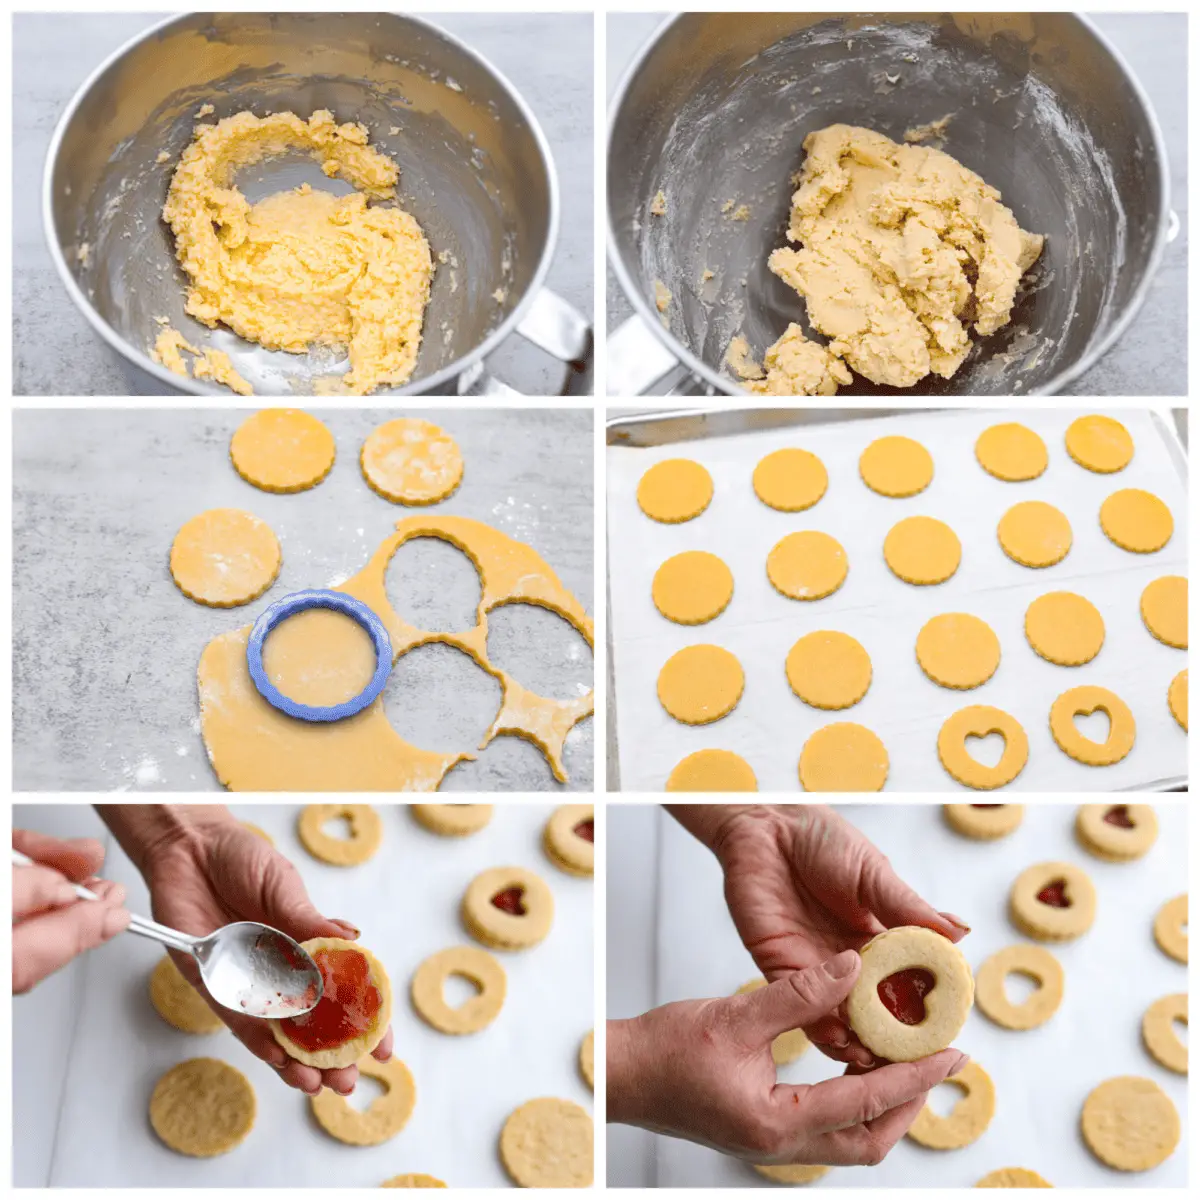 6-photo collage of jammie dodger cookies being prepared. - Jammie Dodgers